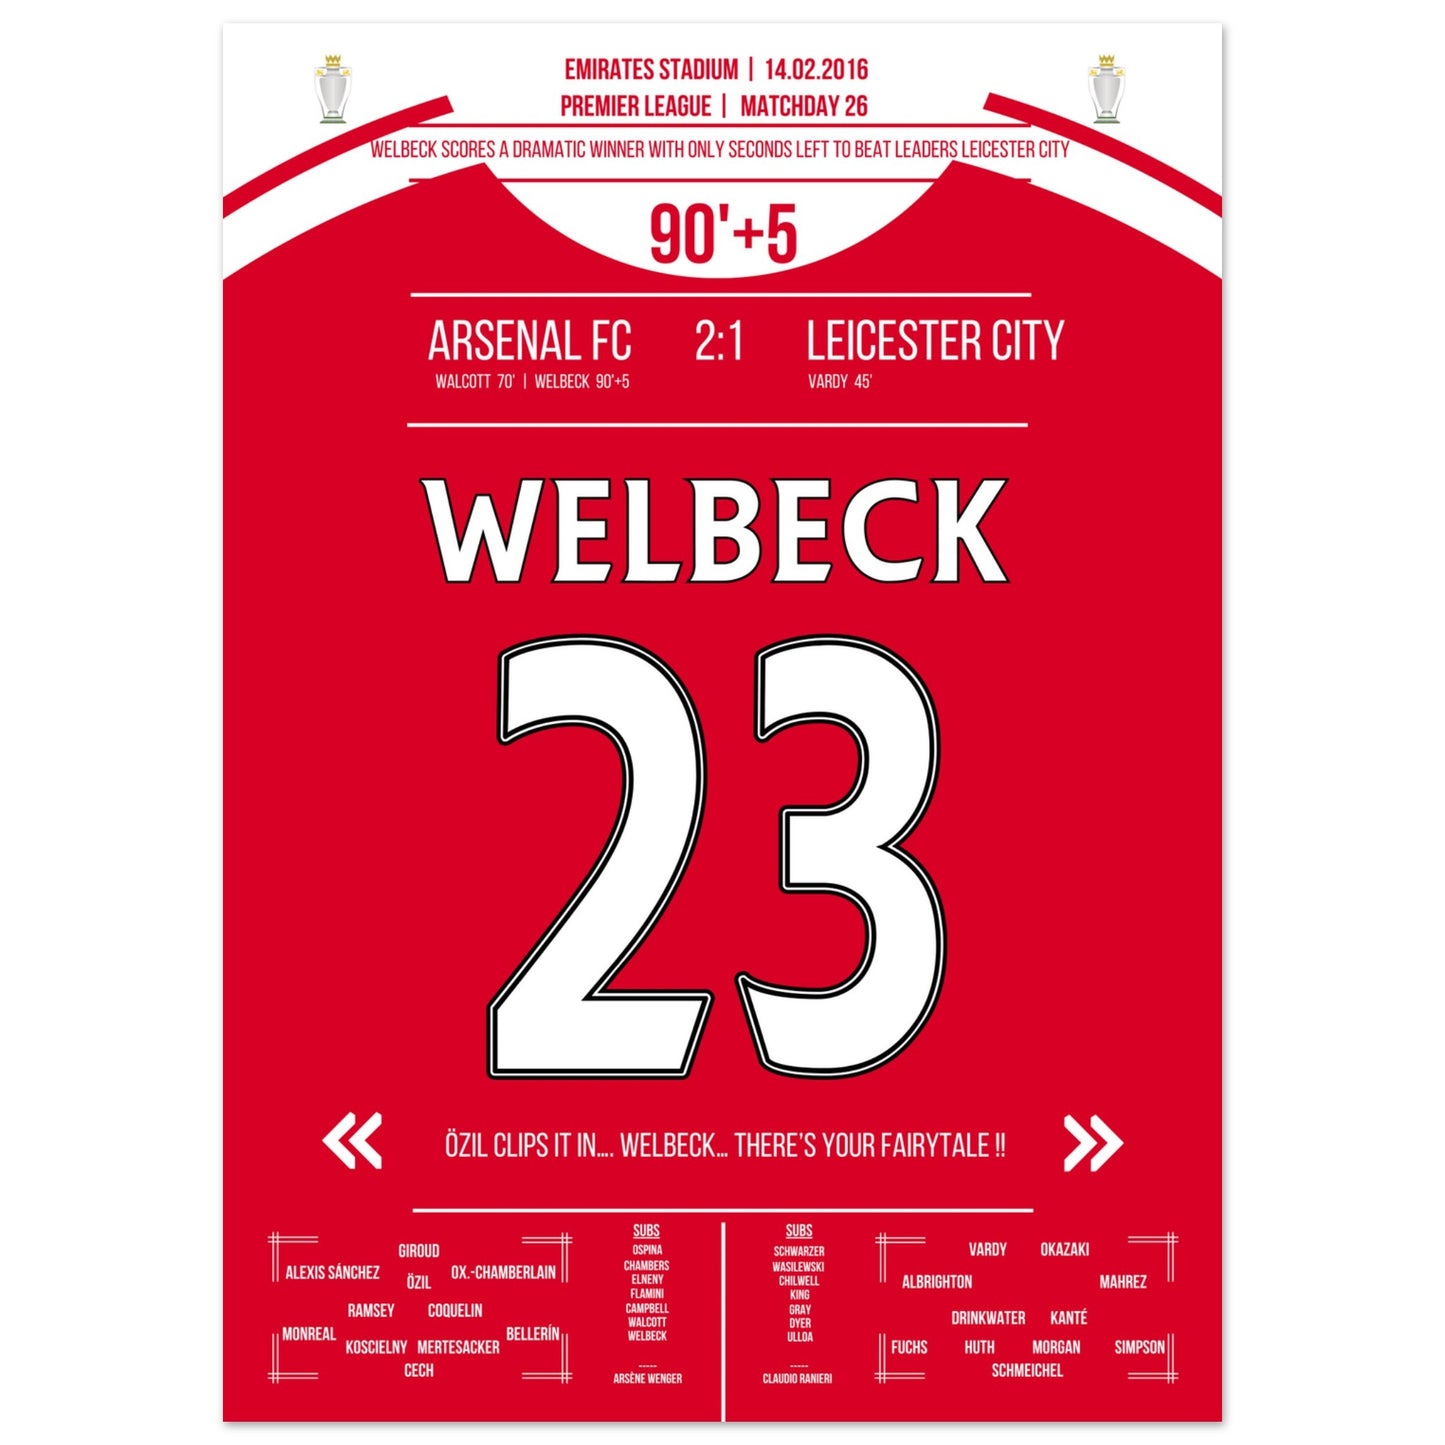 Welbeck's Siegtreffer in letzter Sekunde gegen Leicester in 2016